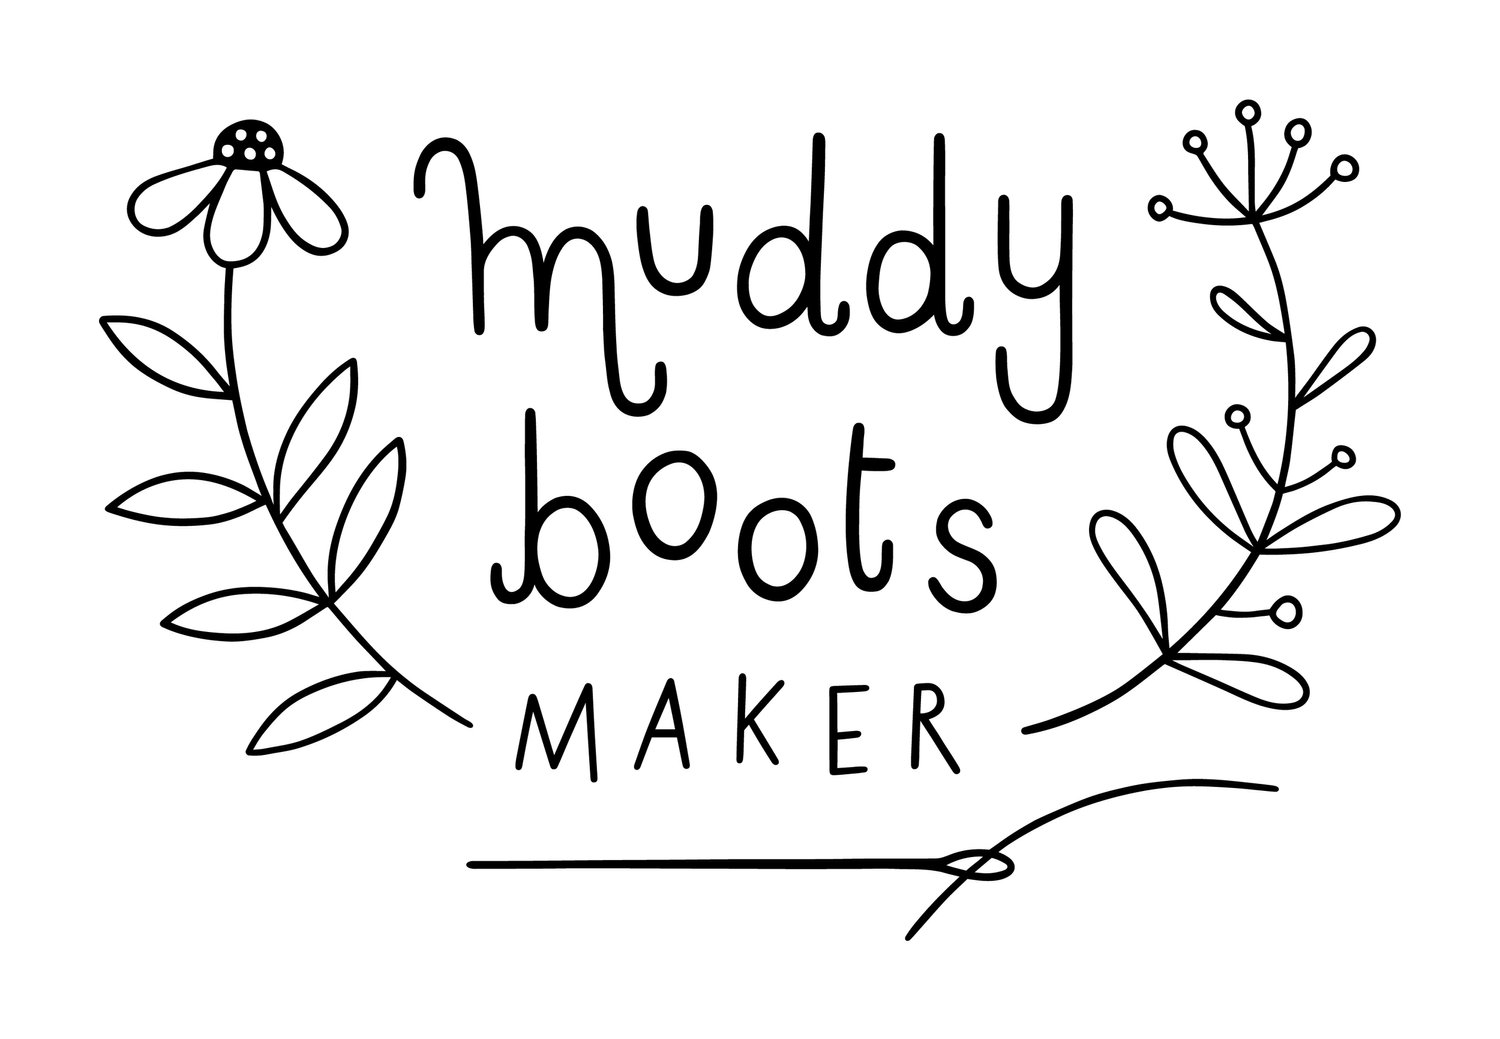 Muddy Boots Maker